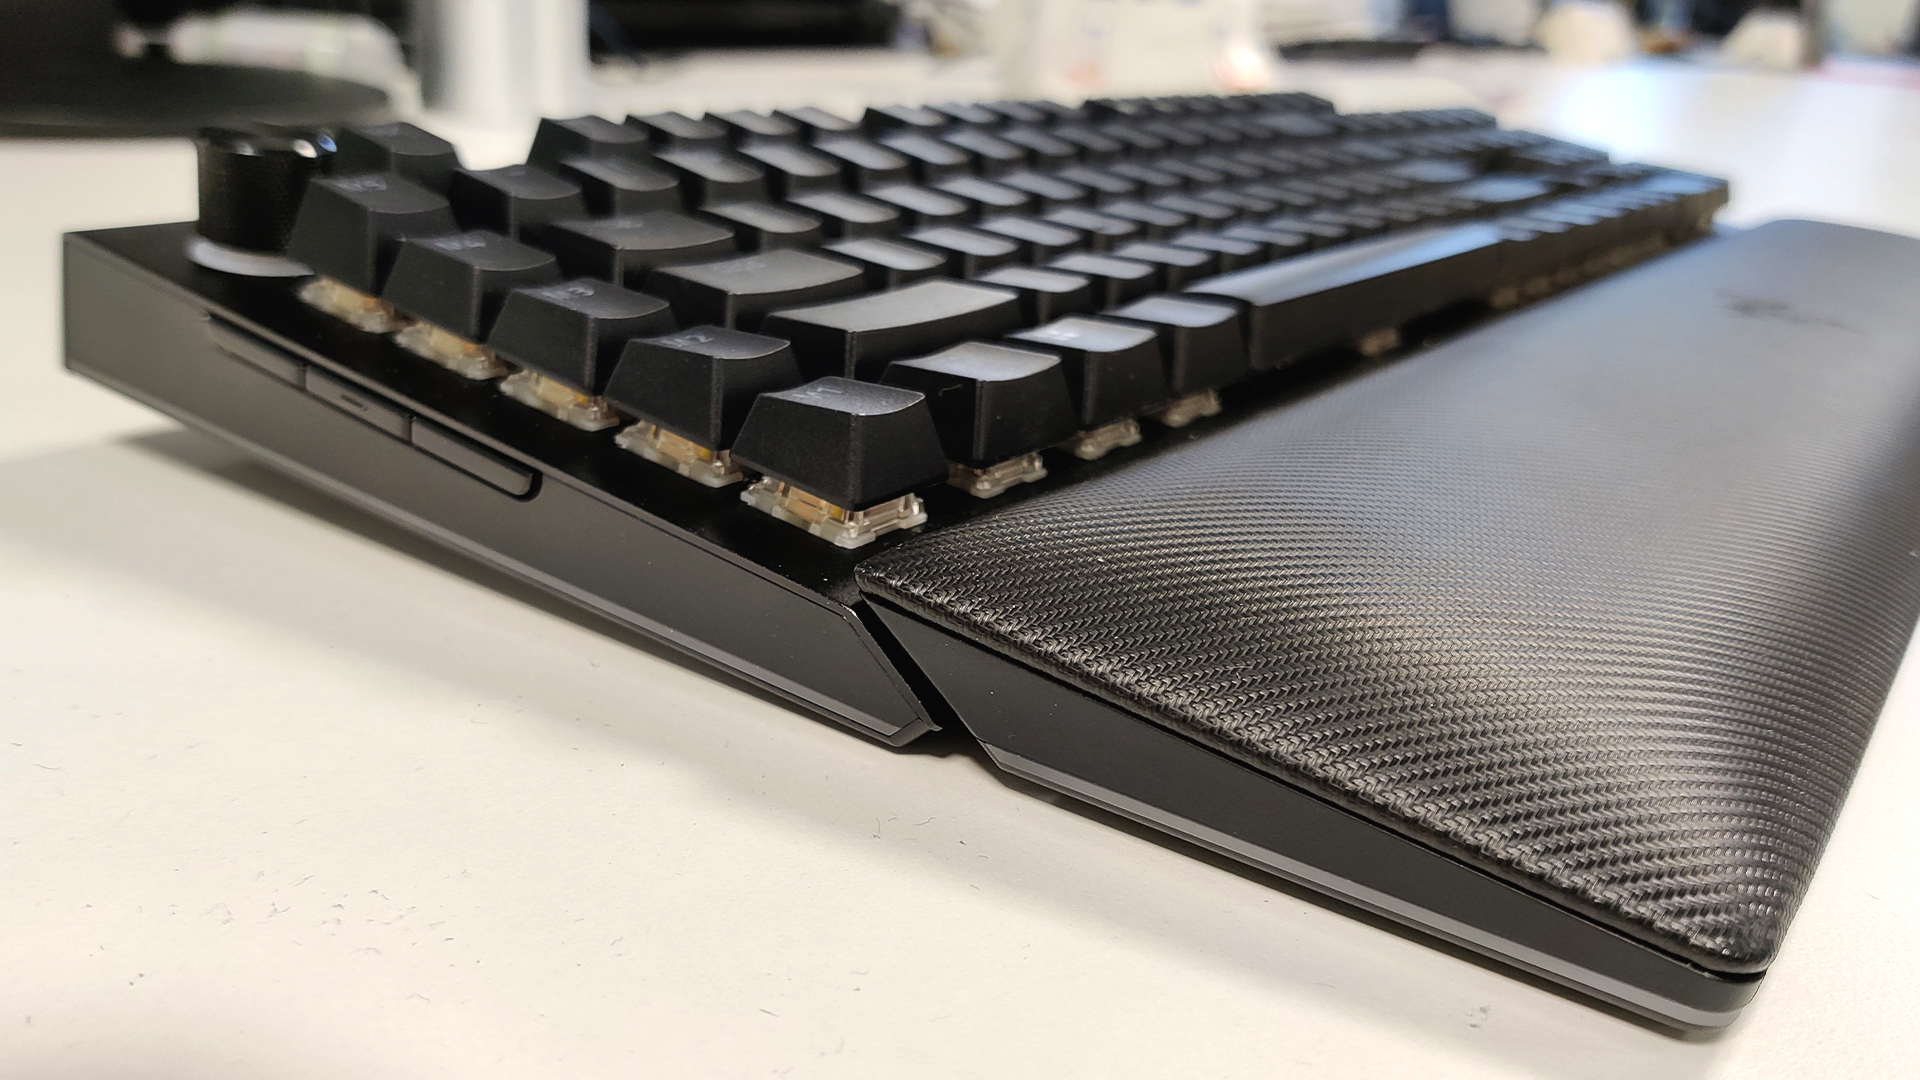 Mechanical Gaming Keyboard - Razer BlackWidow V4 Pro with RGB Lighting